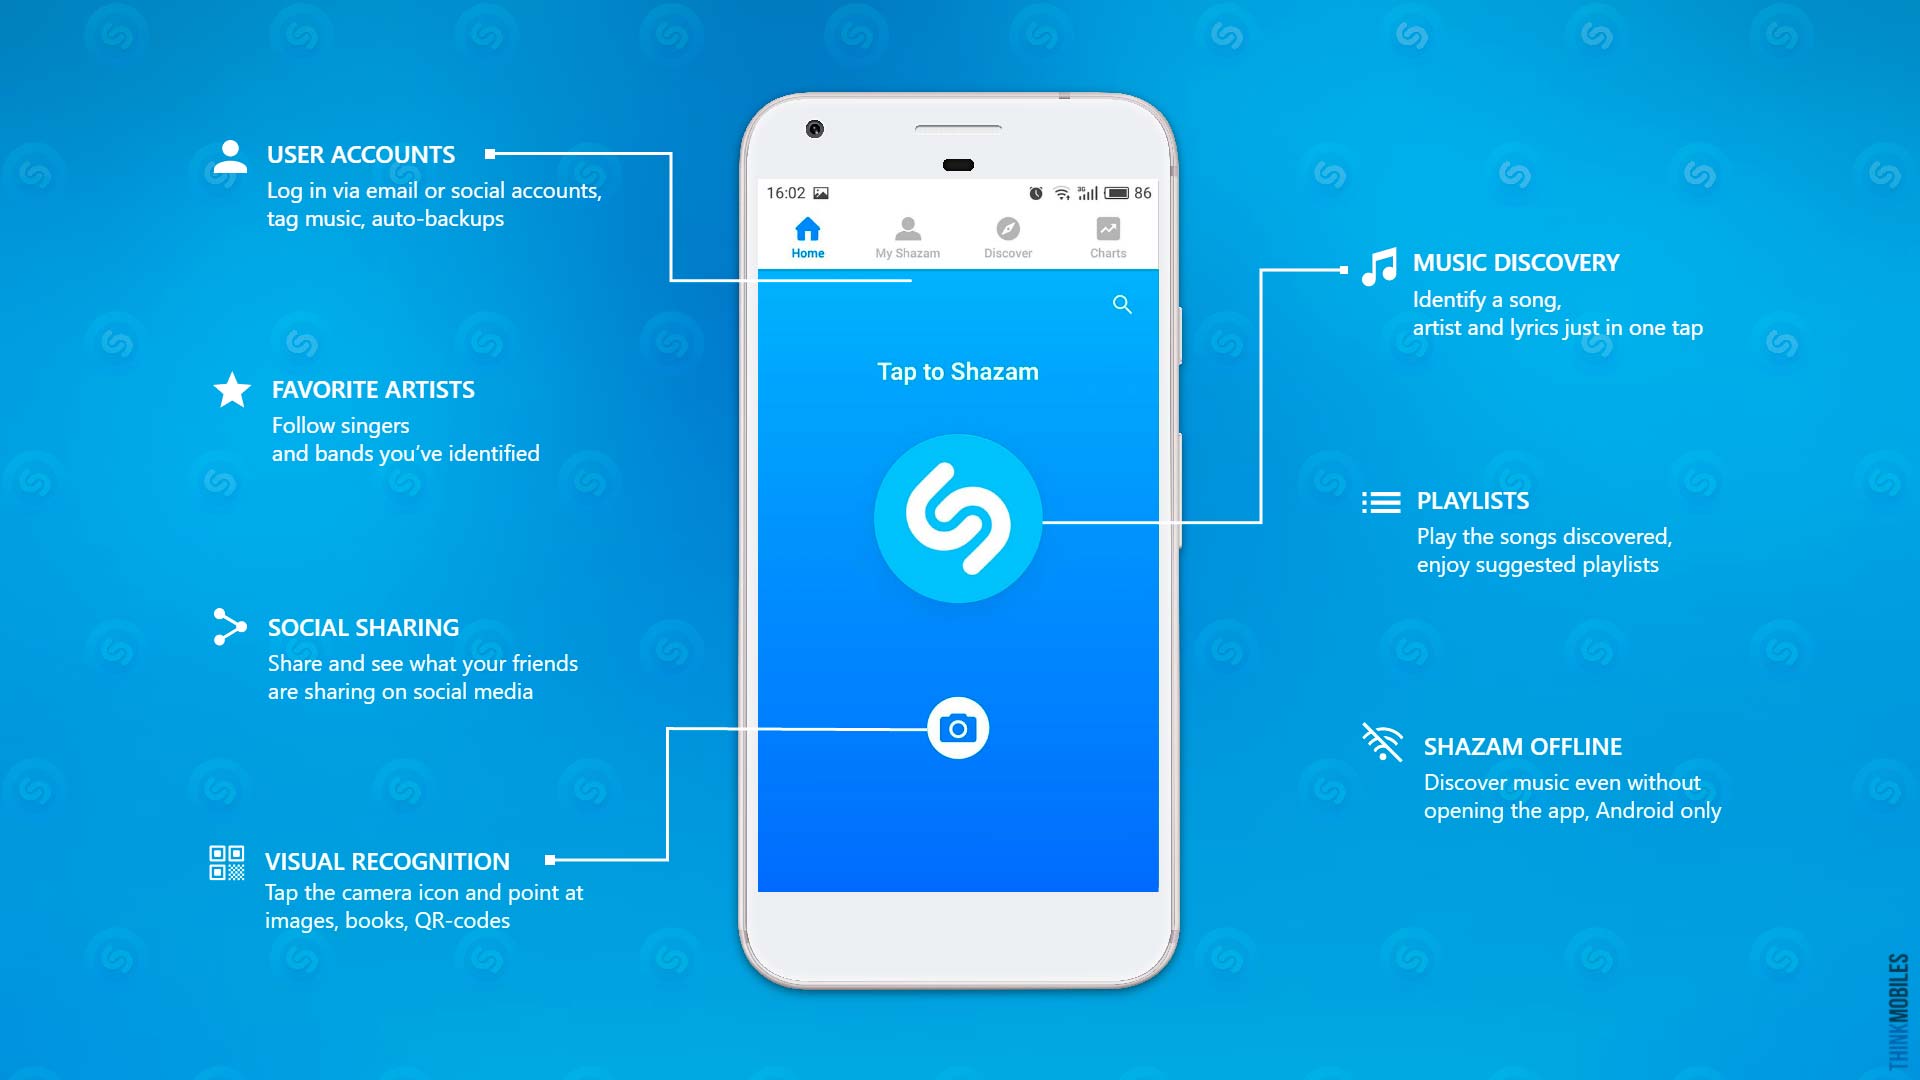 Shazam app features